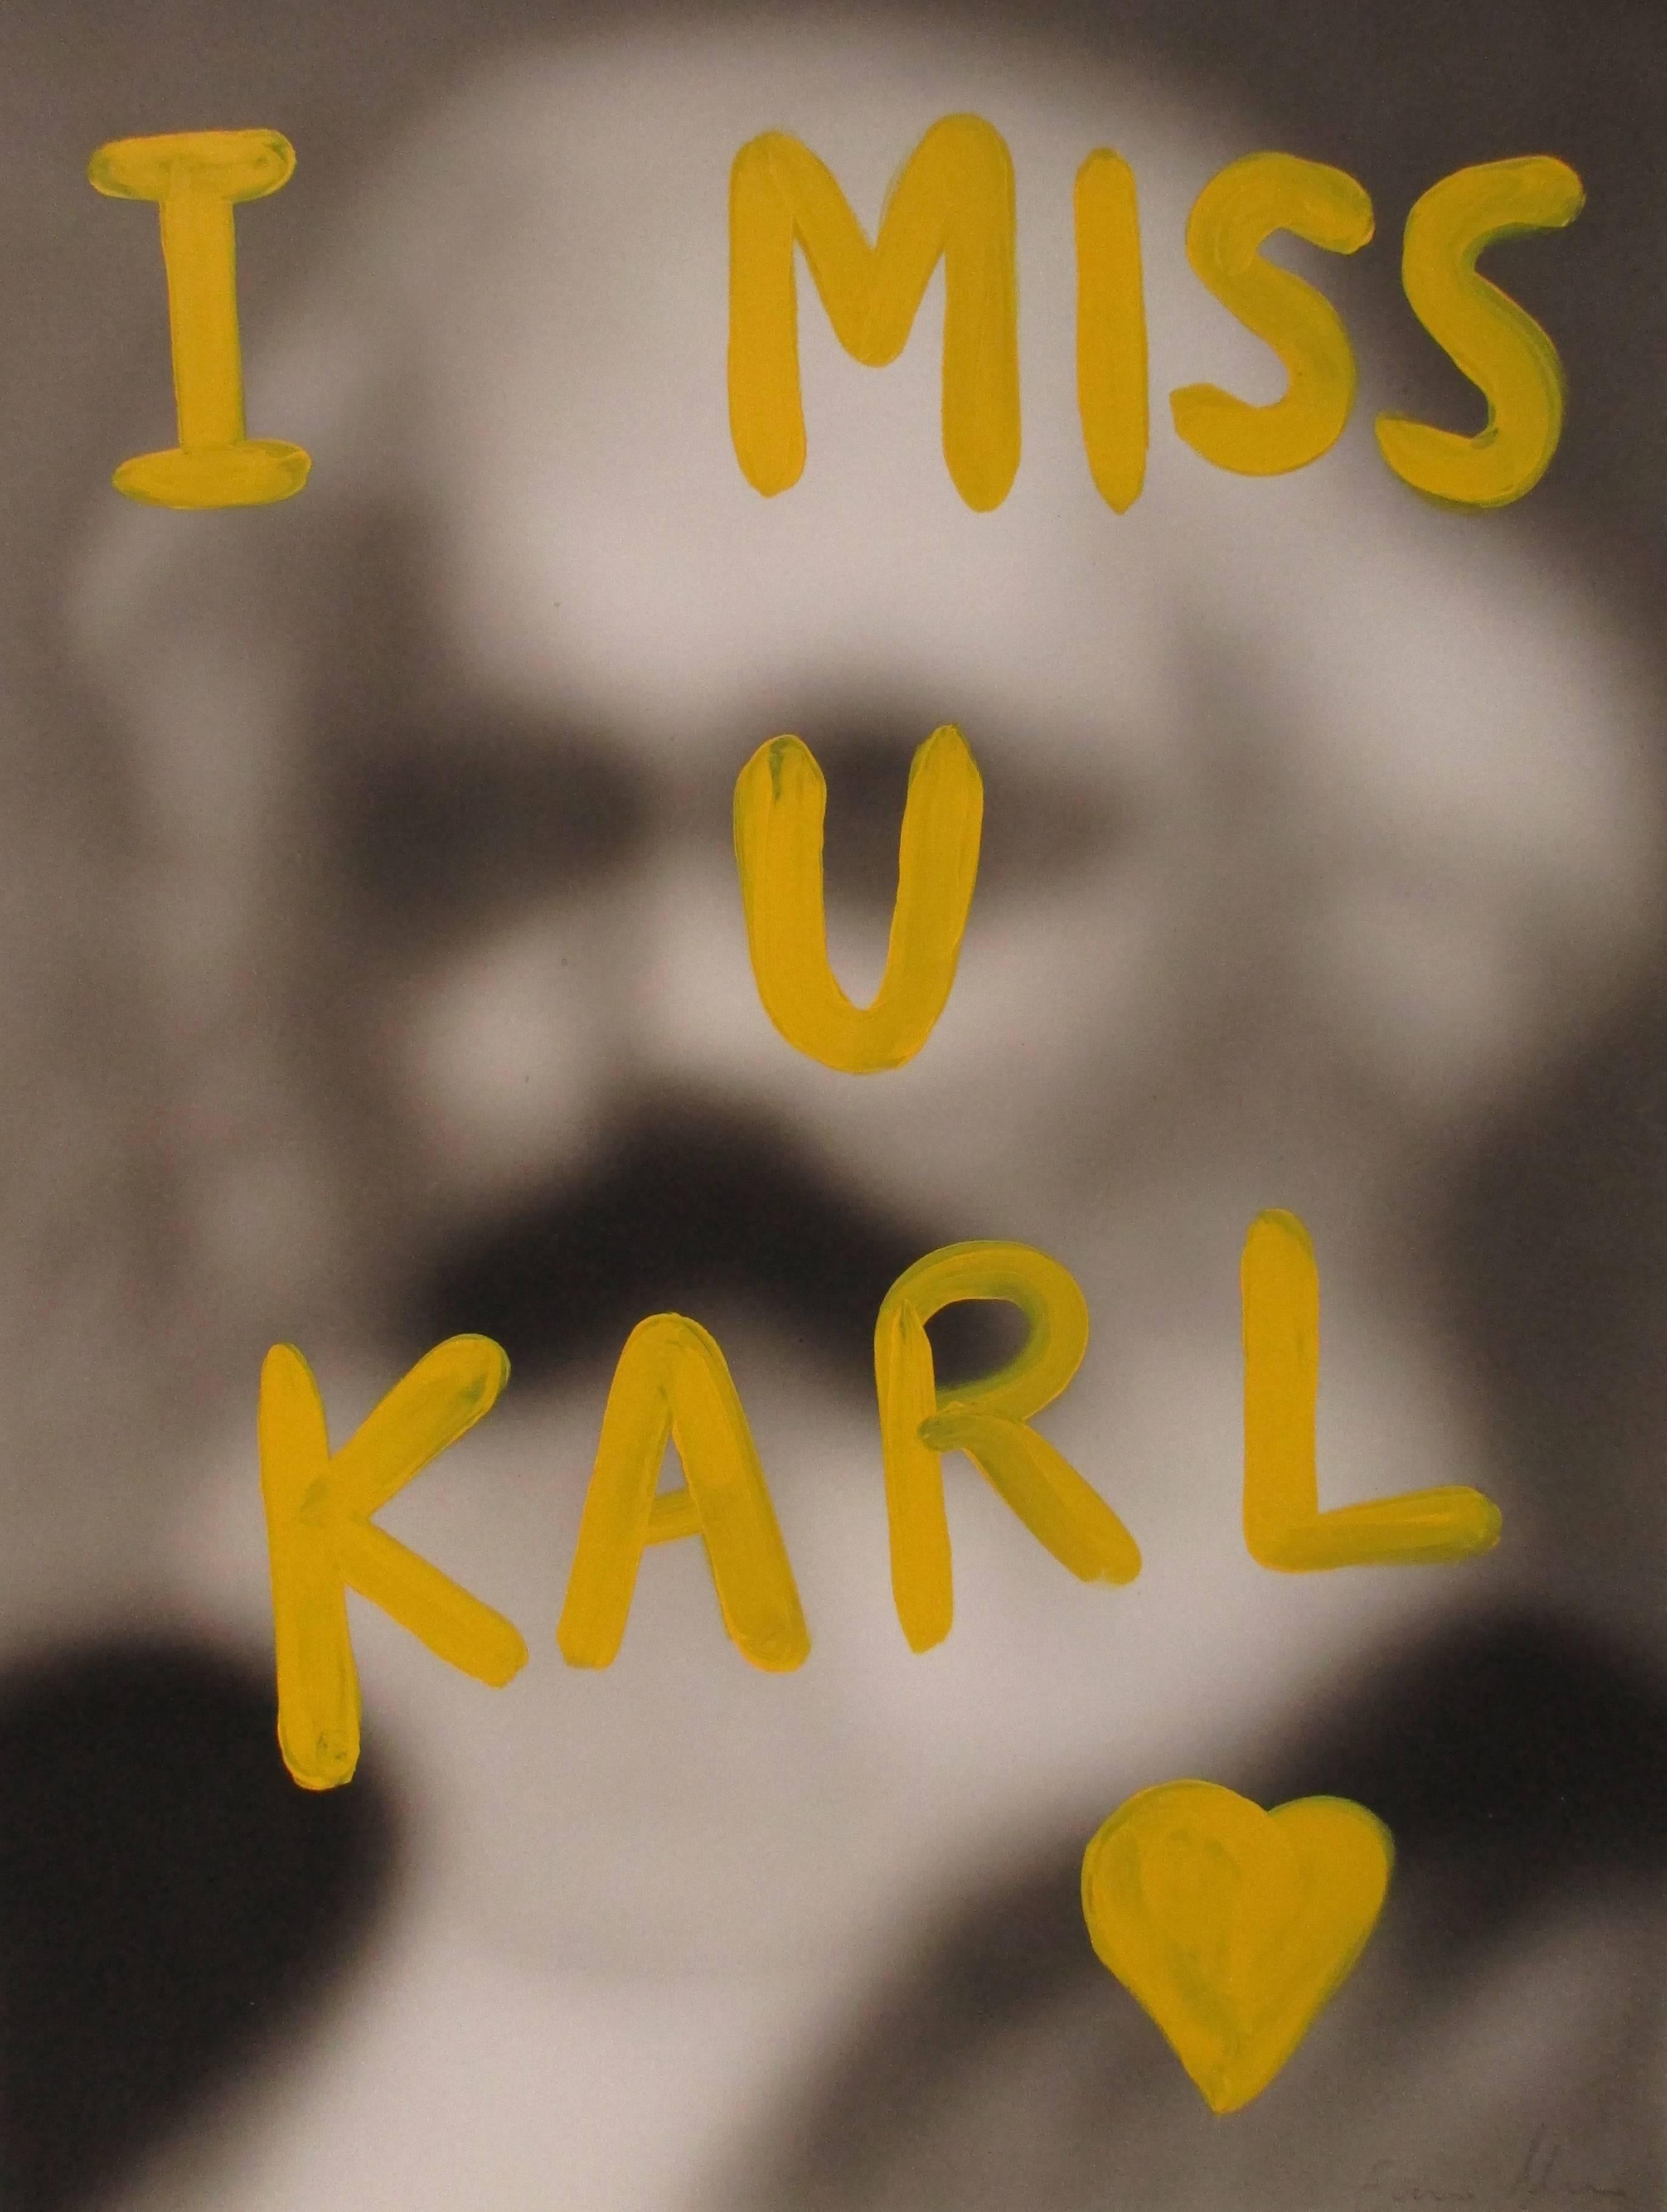 Eugenio Merino Abstract Print - I Miss U Karl